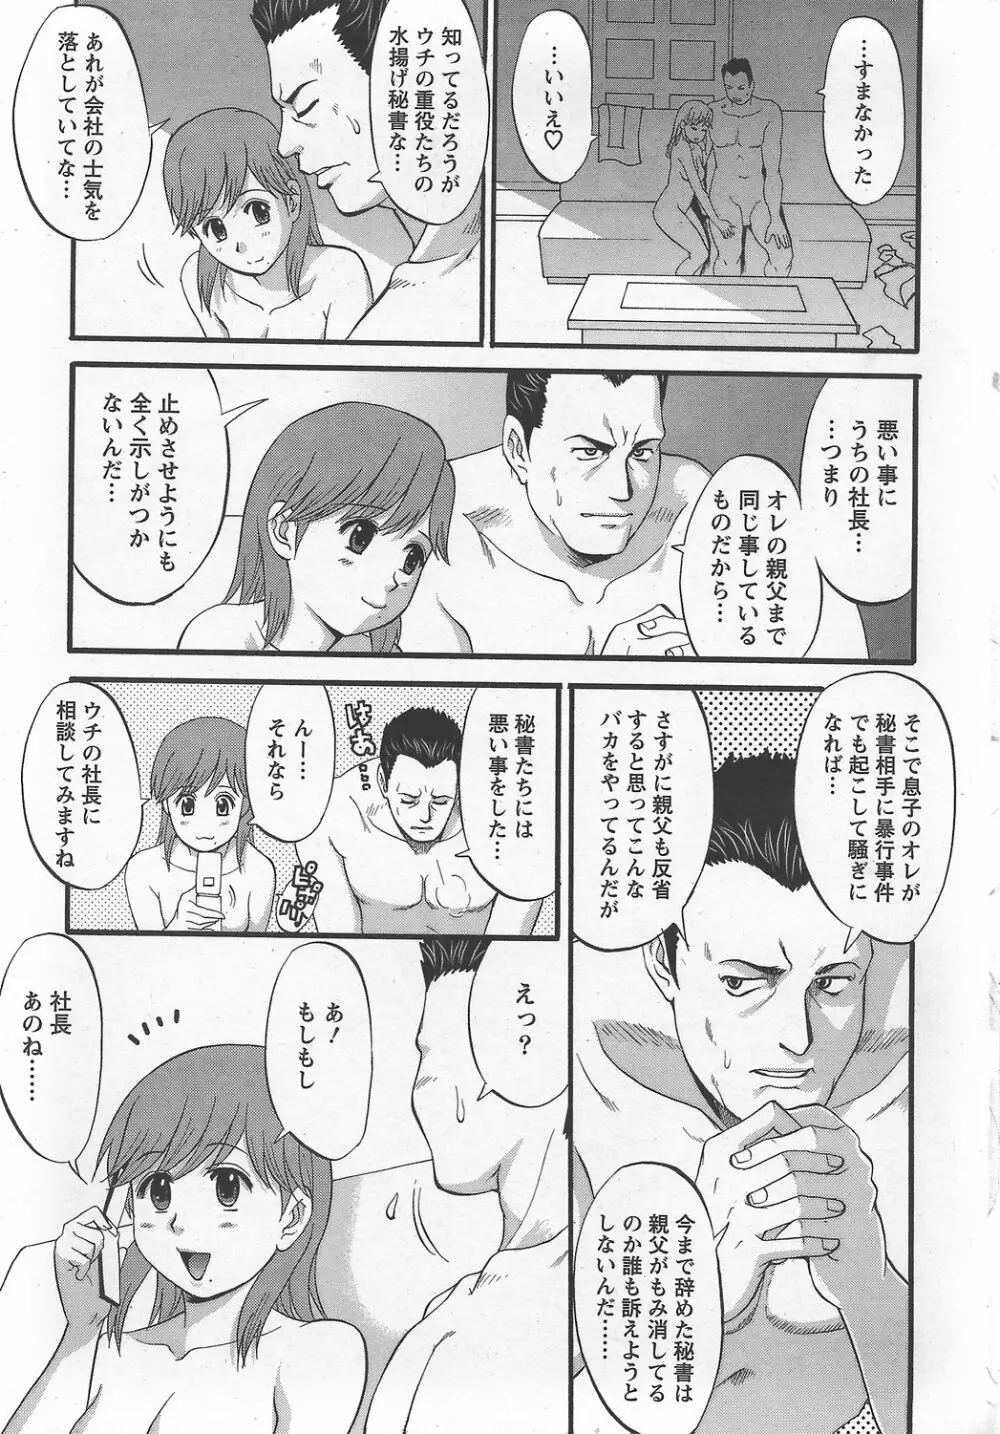 Haken no Muuko-san 4 20ページ